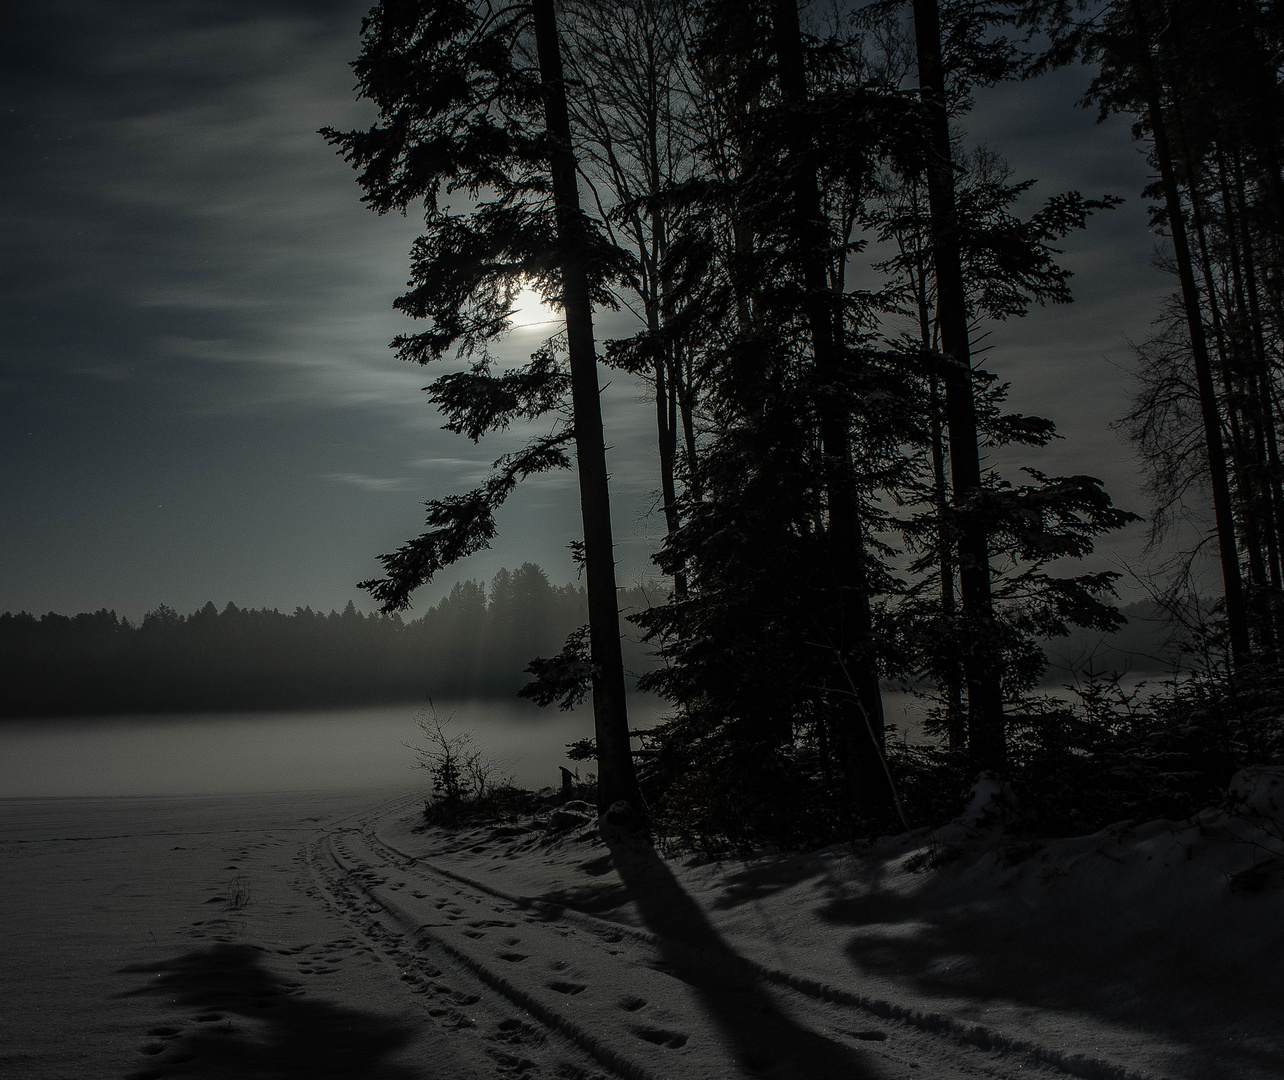 A frozen winter night